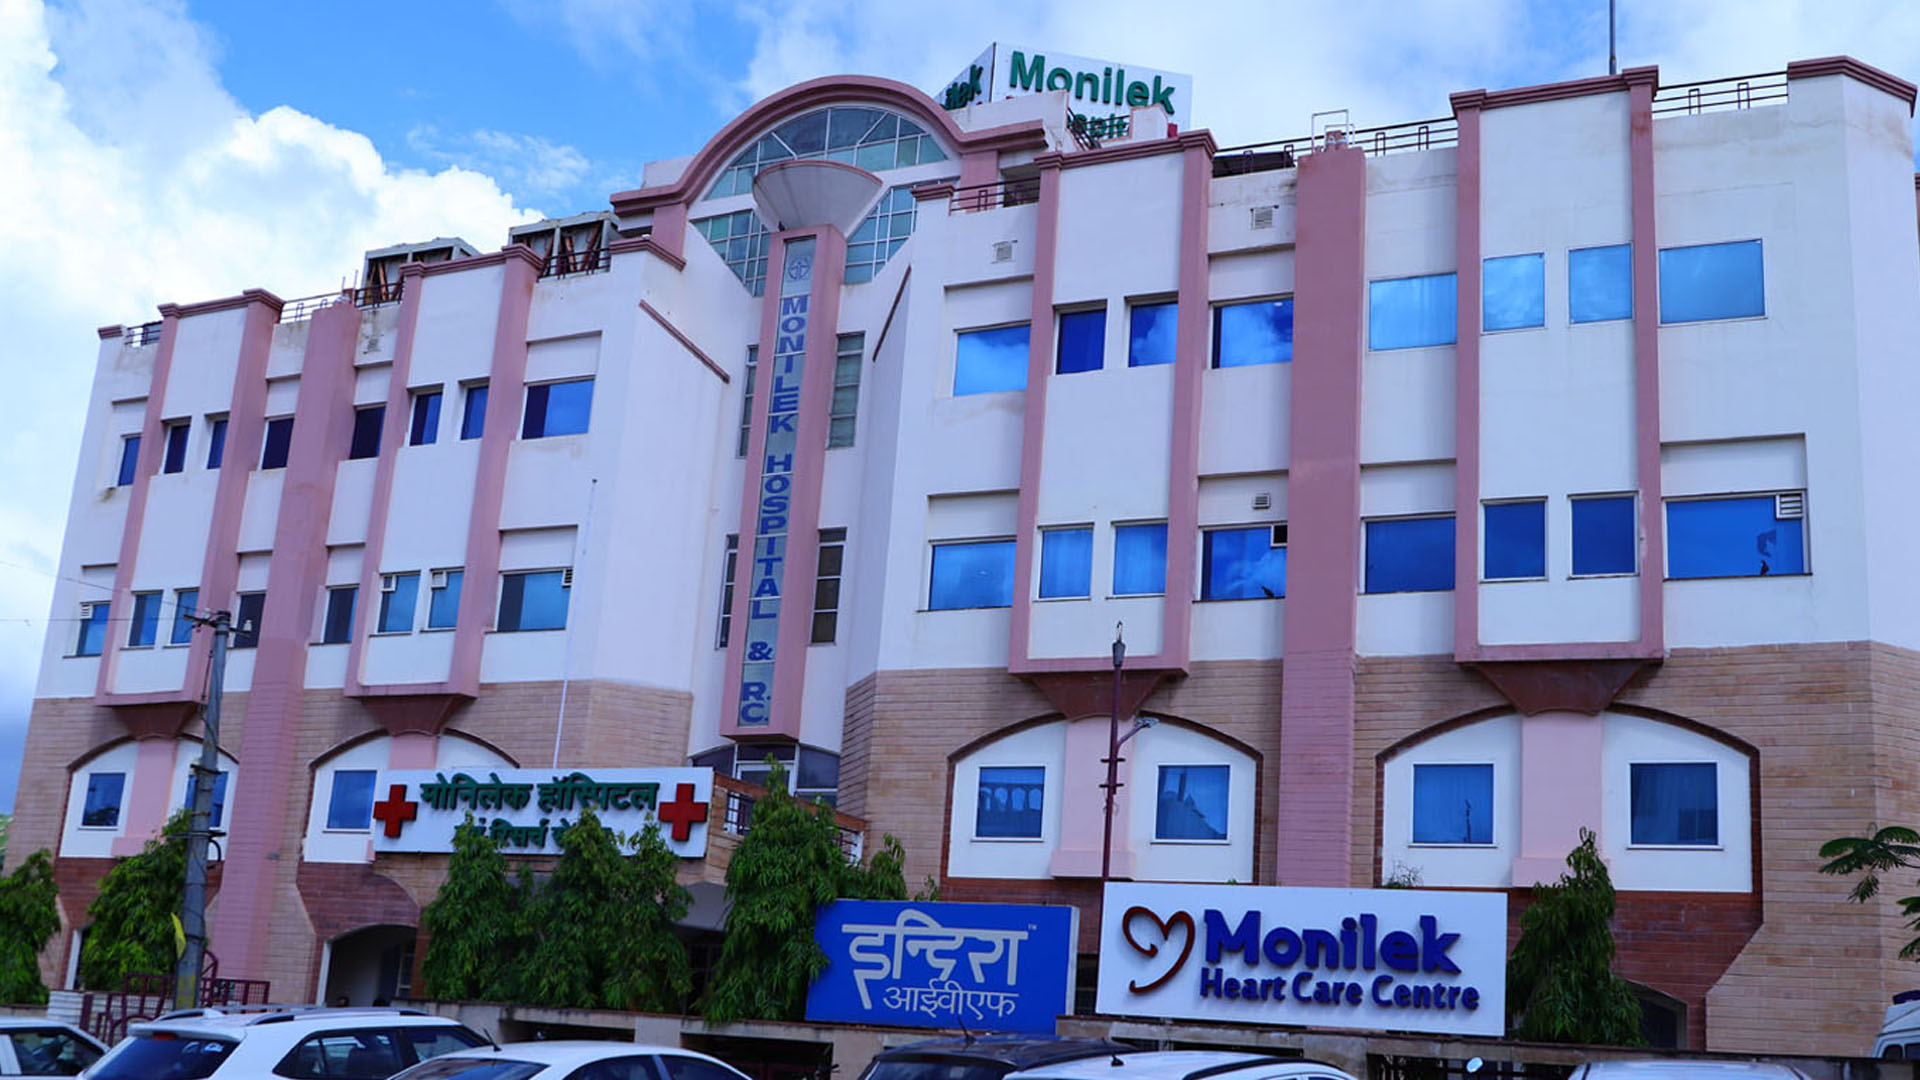 Monilek Hospital & Research Centre